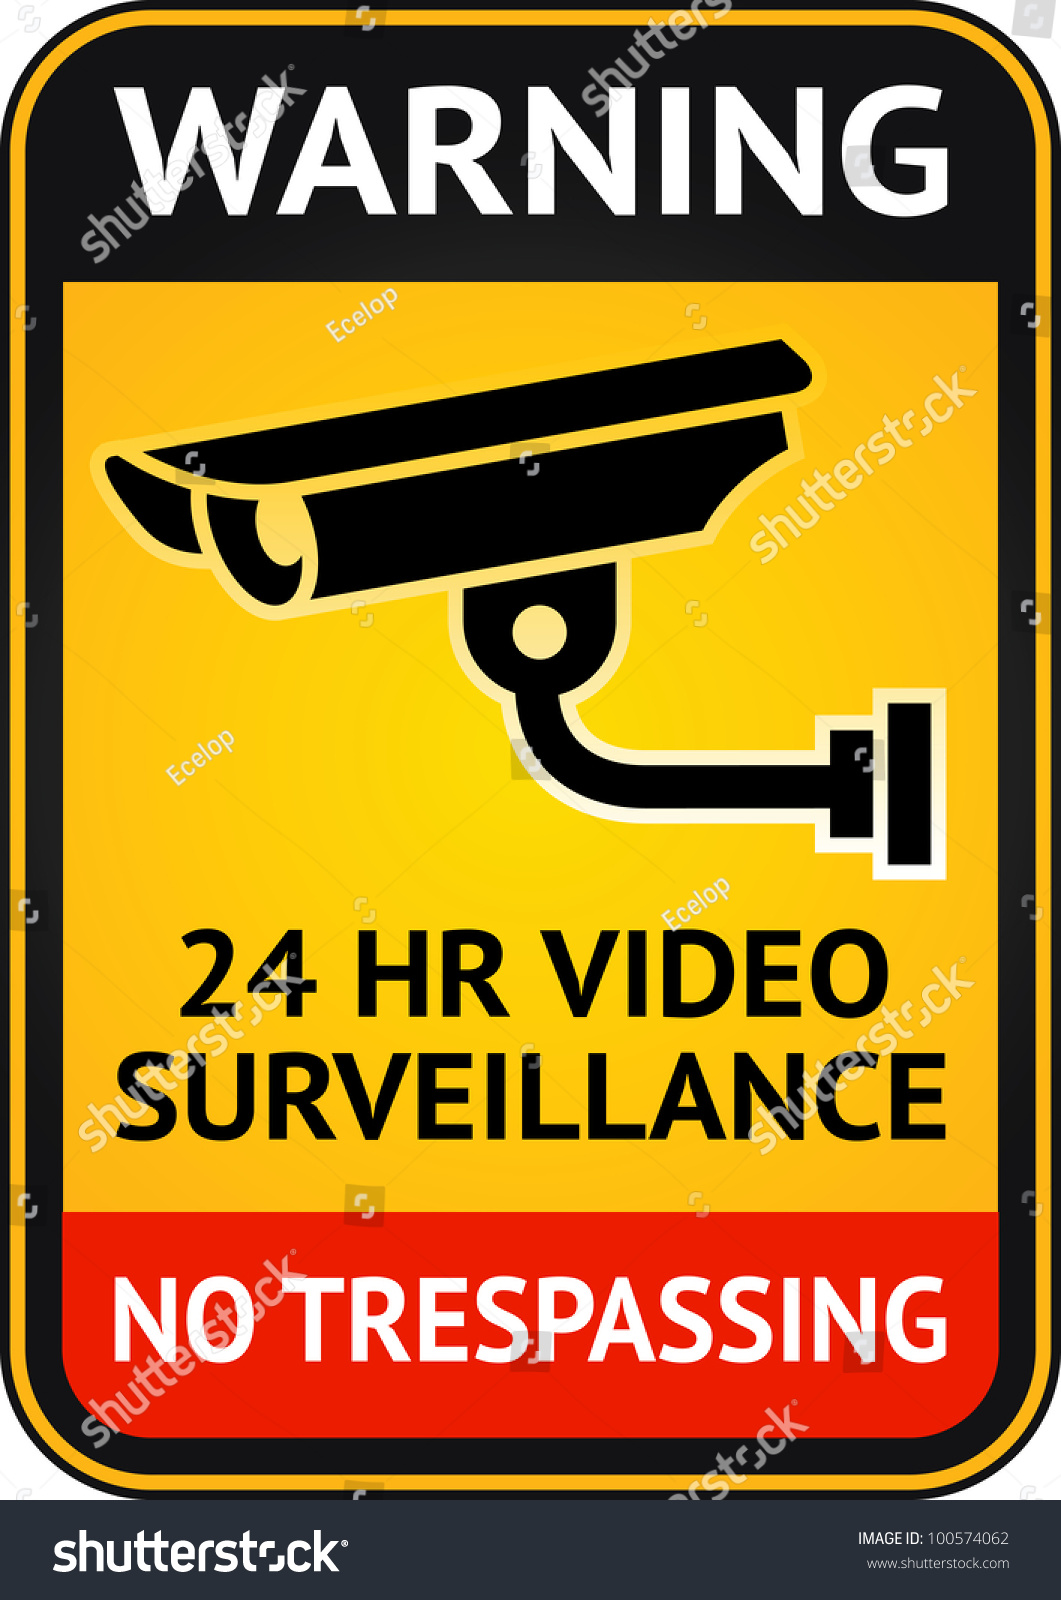 10pc CCTV Video Surveillance Security Camera Alarm Sticker Warning Decal Signs